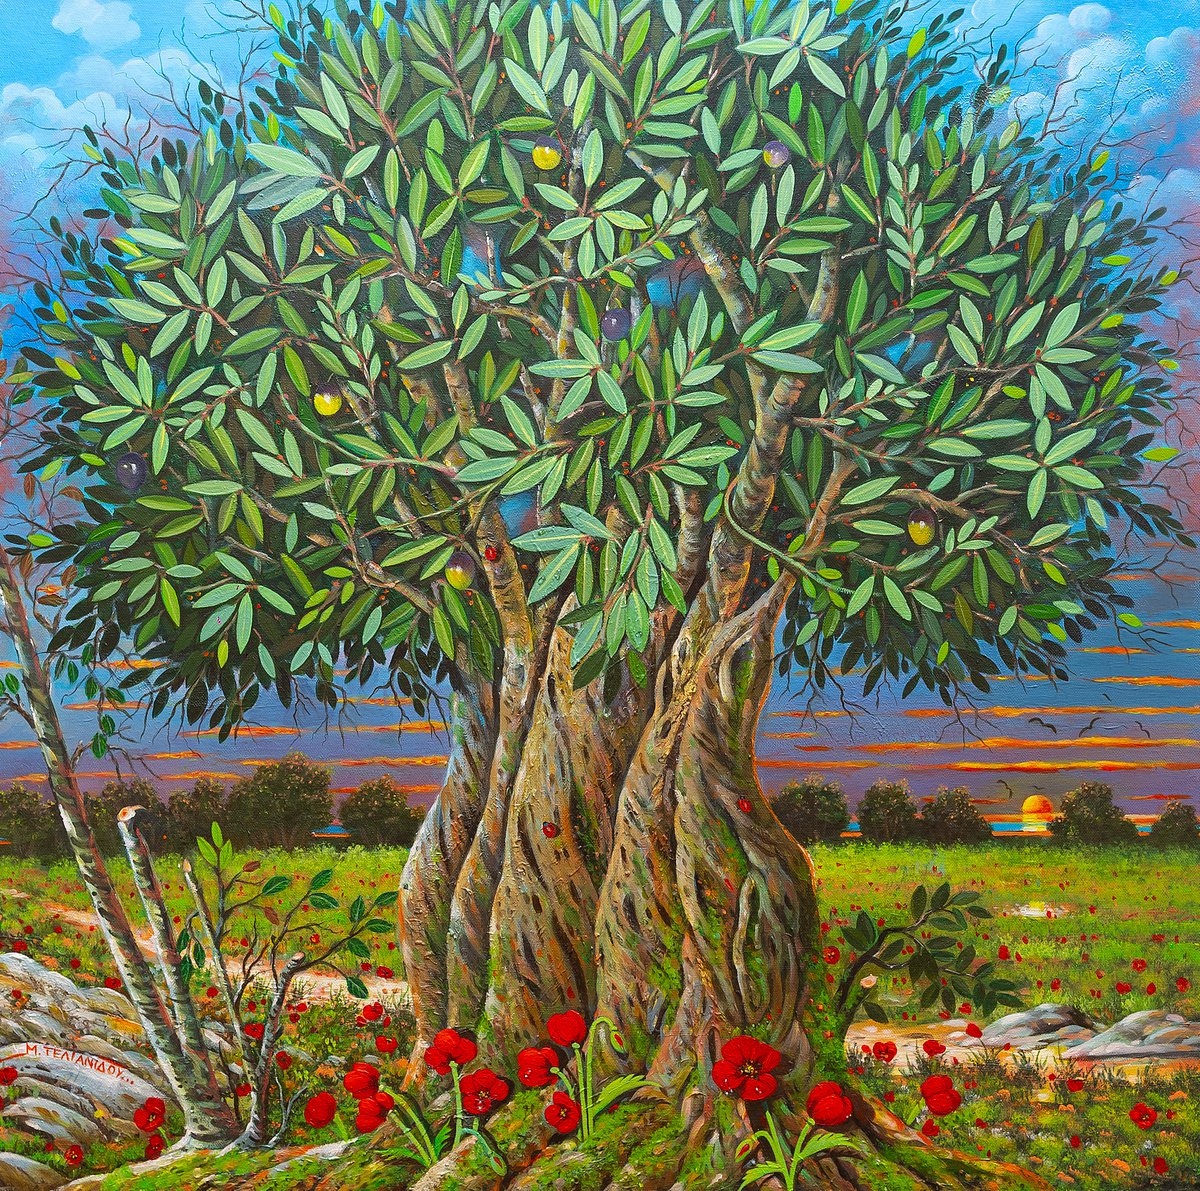 Centenarian olive tree by Margarita Telianidis